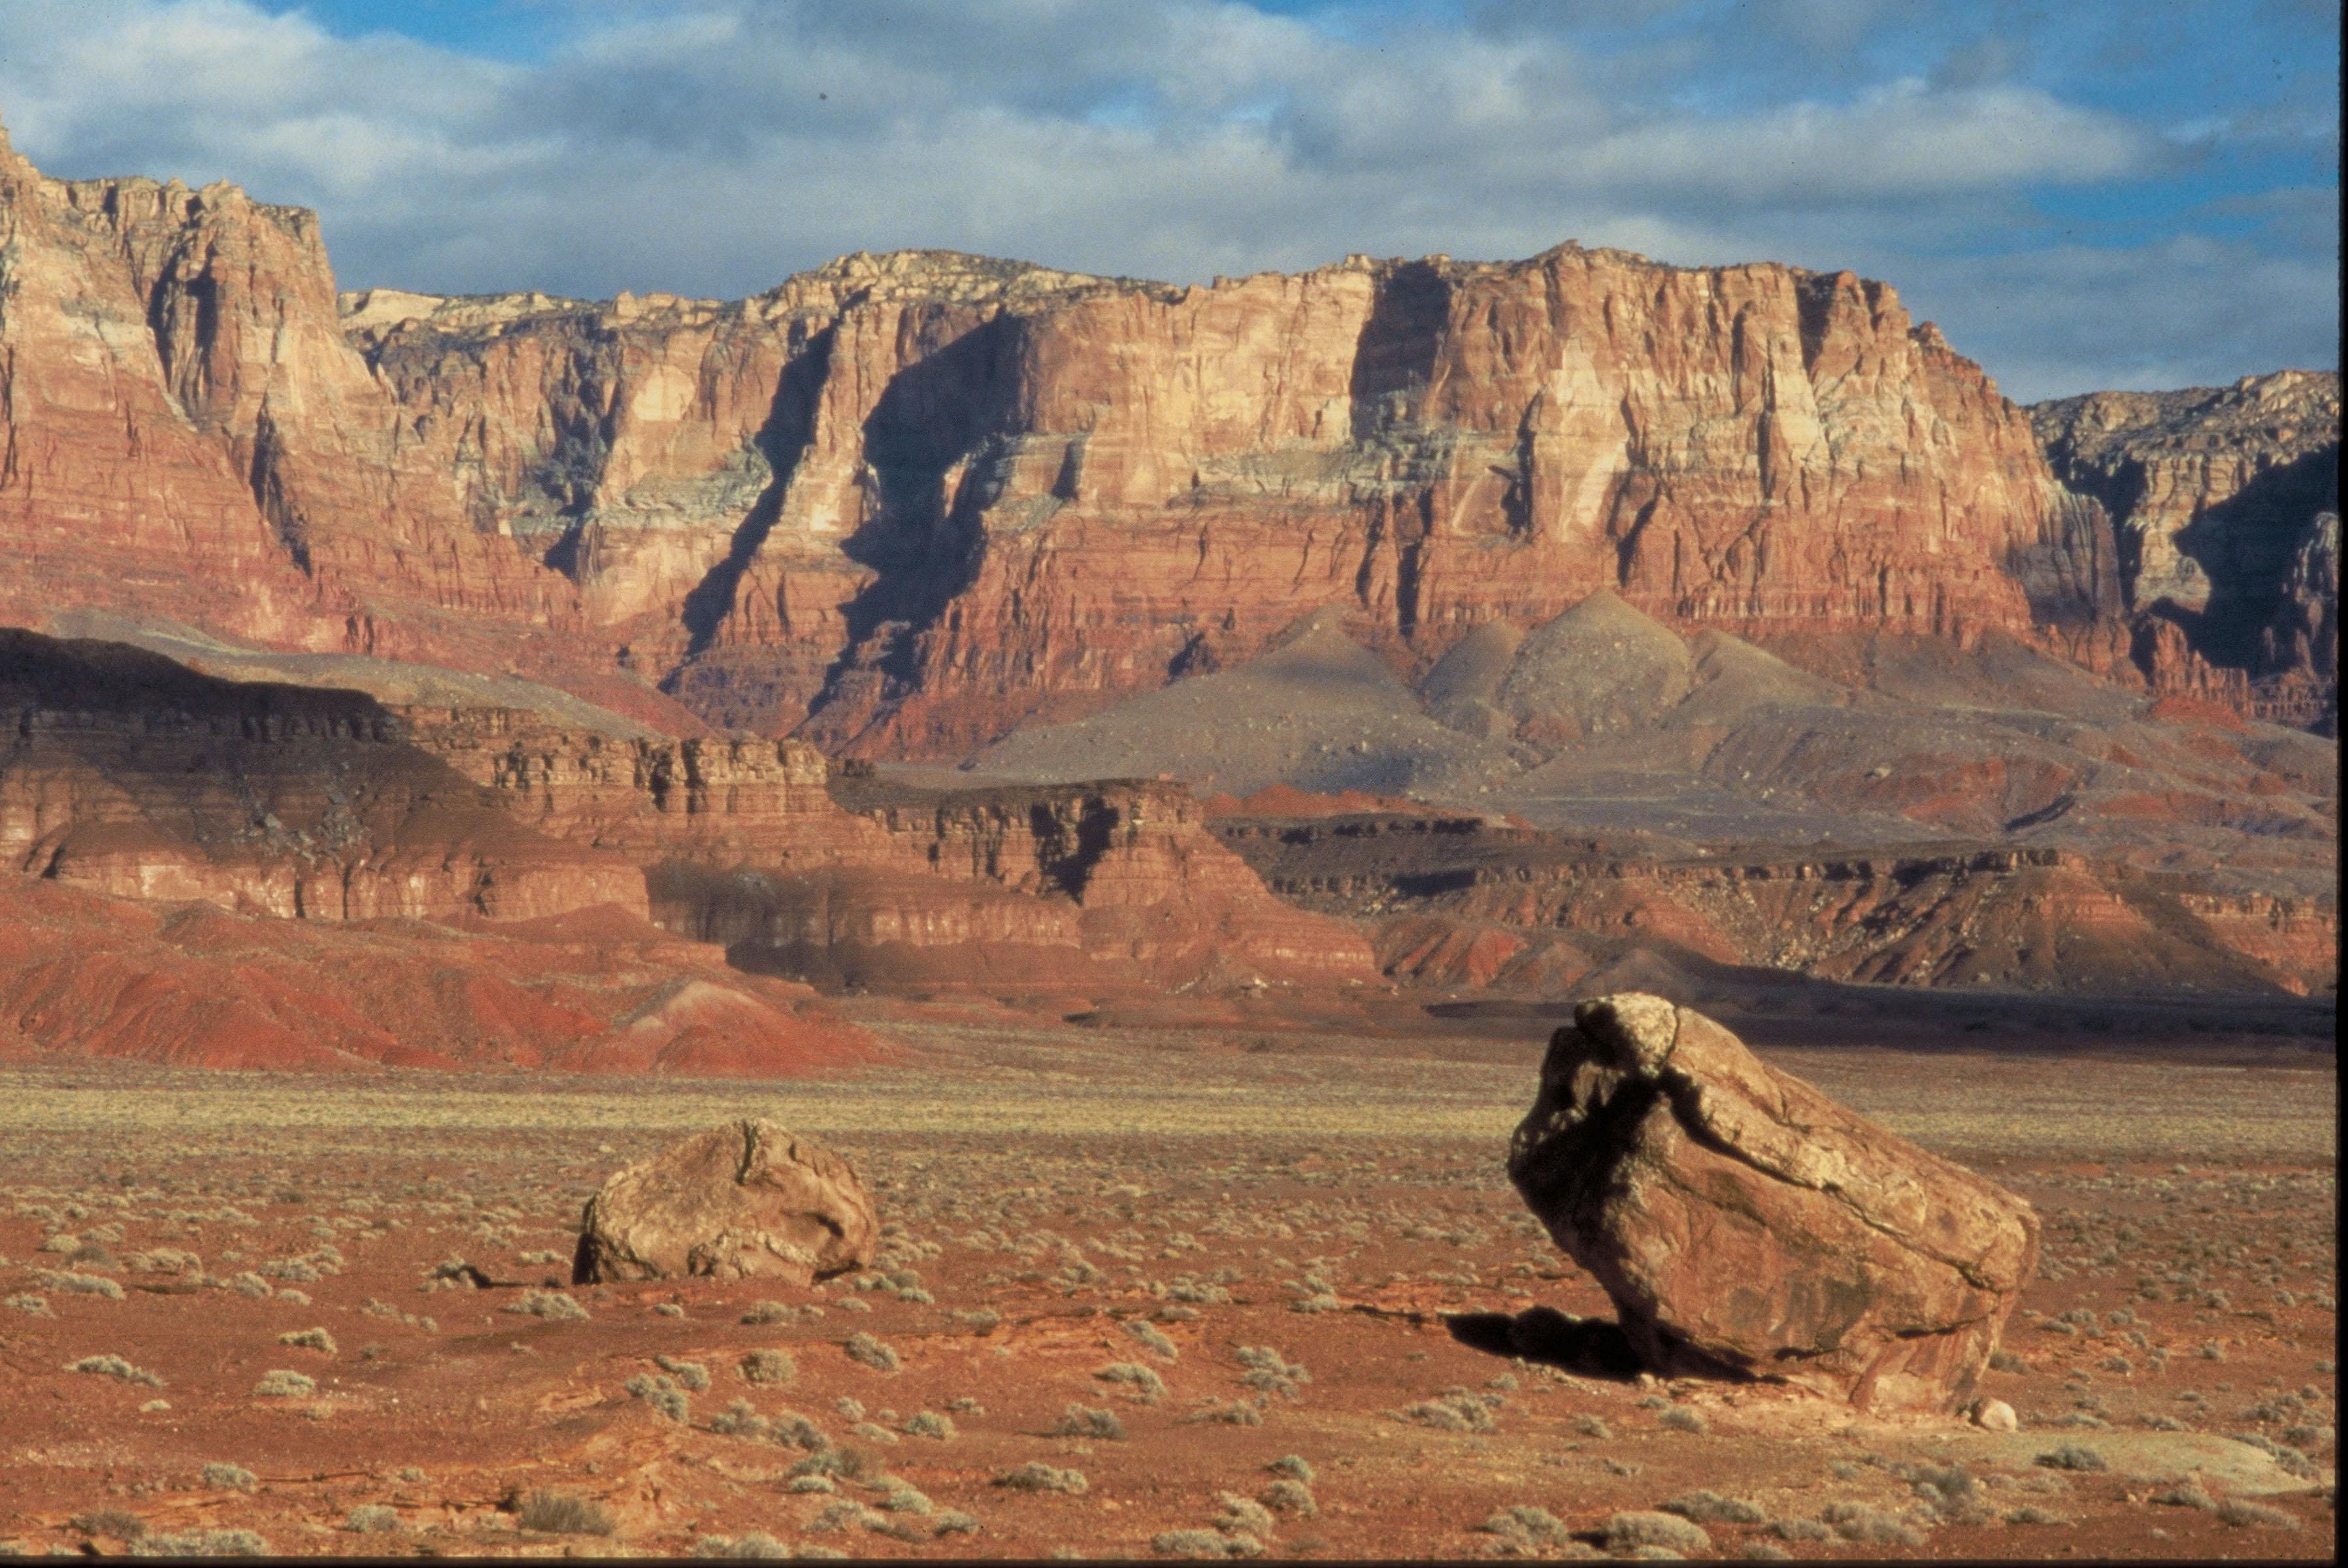 Desert_canyon_view.jpg